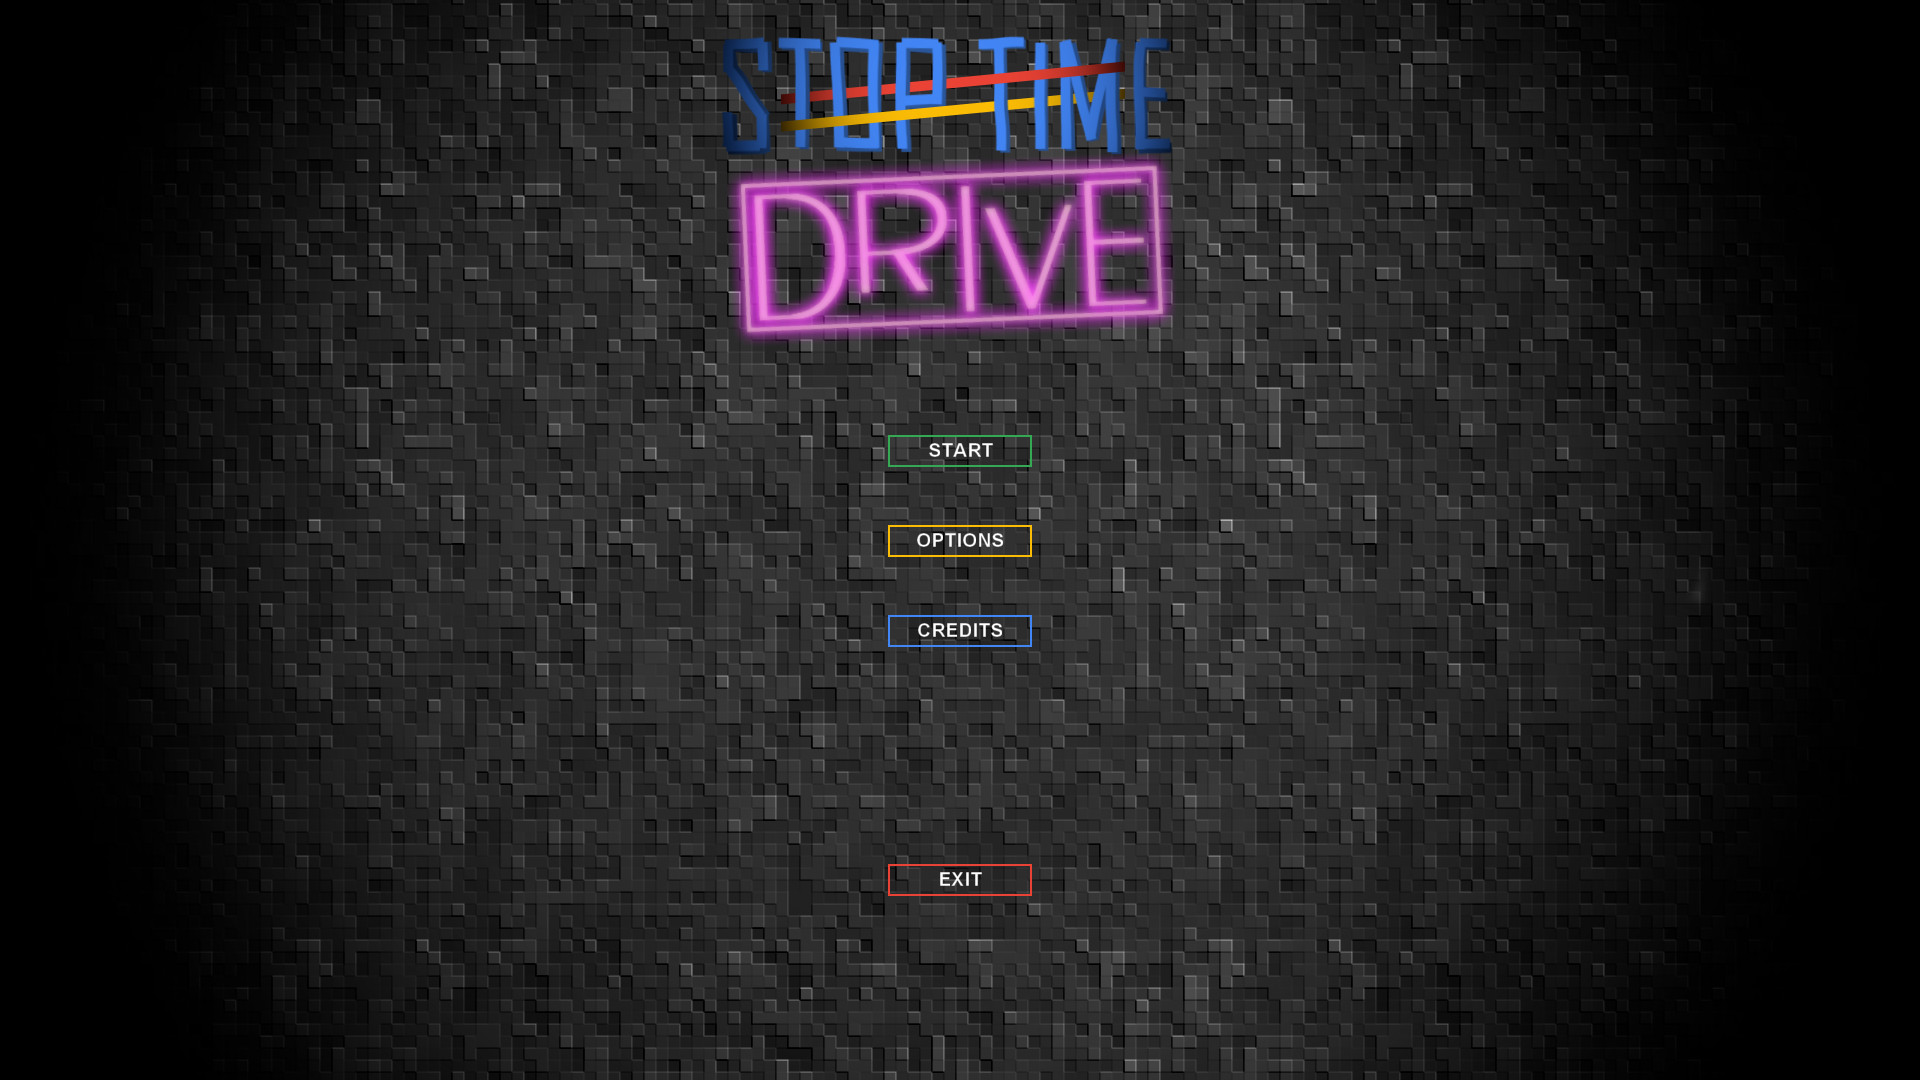 StopTime Drive screenshot